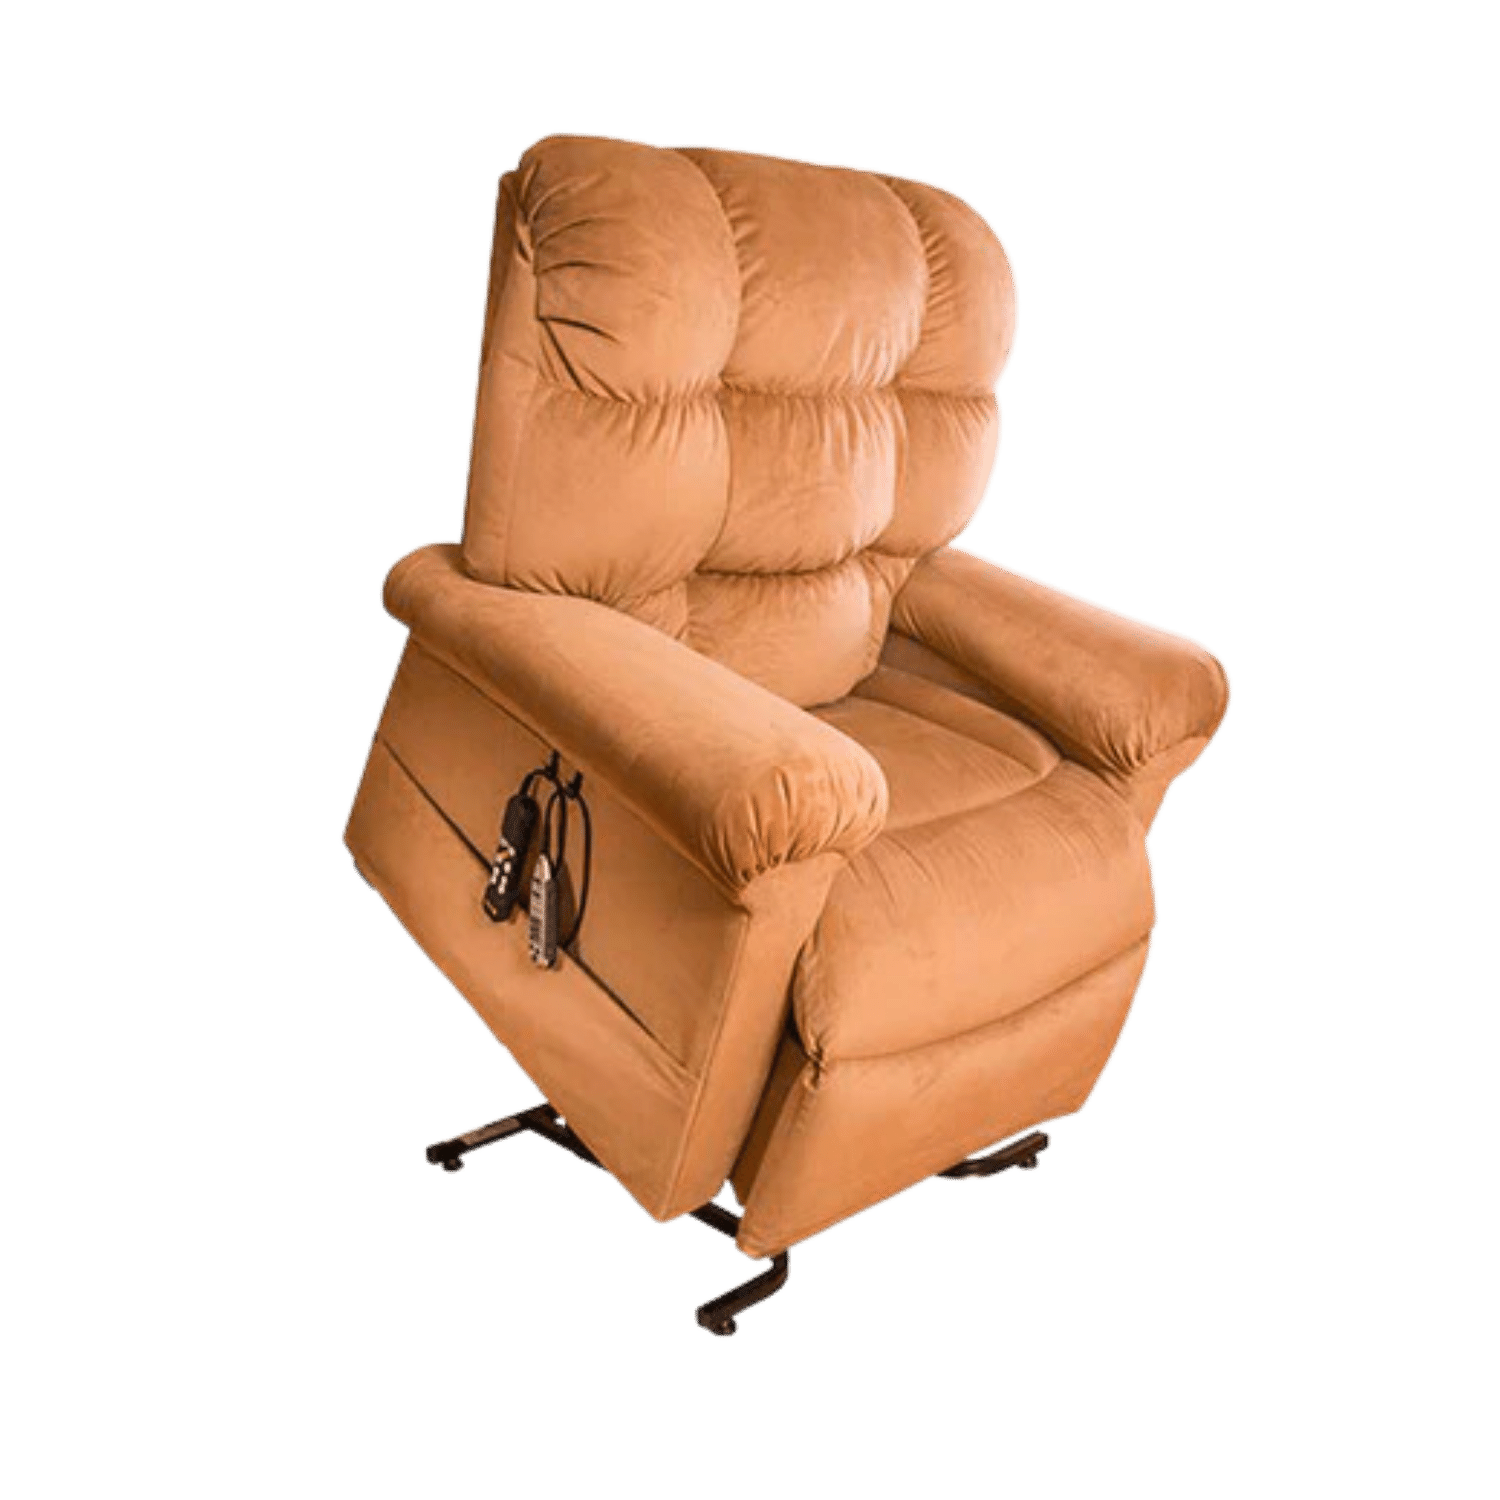 JOURNEY Perfect Sleep Chair Power Recliner - Deluxe 2 Zone